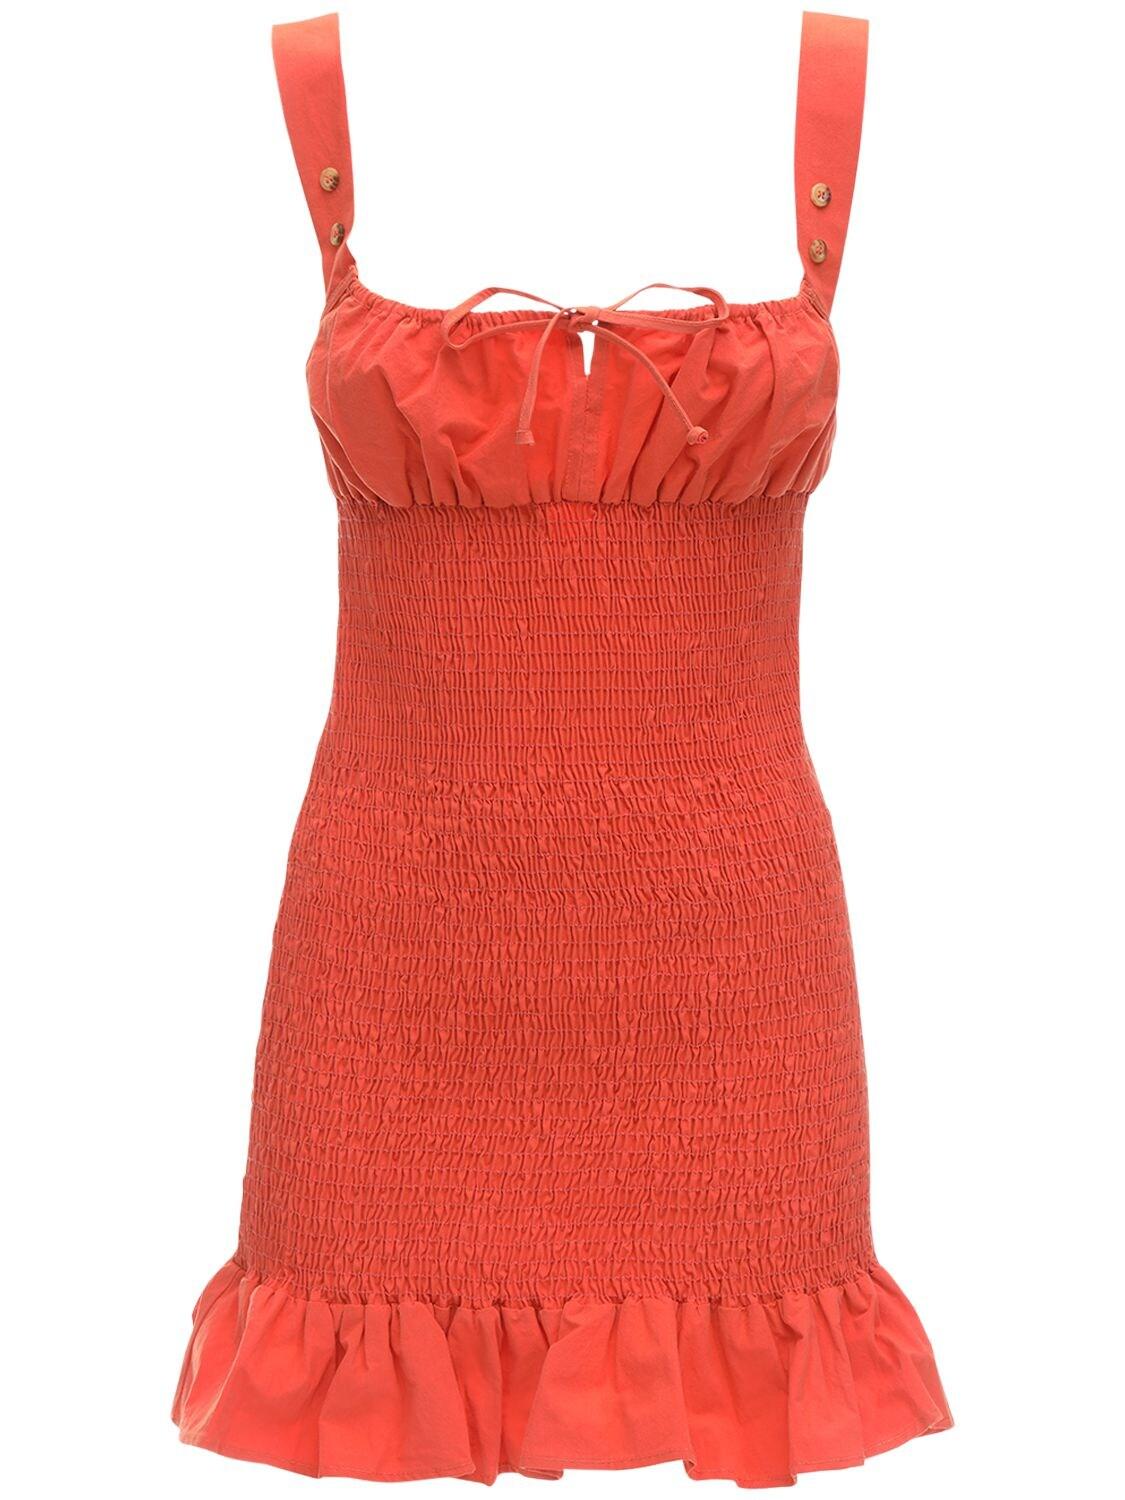 Ciao Lucia Cara Cotton Poplin Mini Dress in Red - Lyst